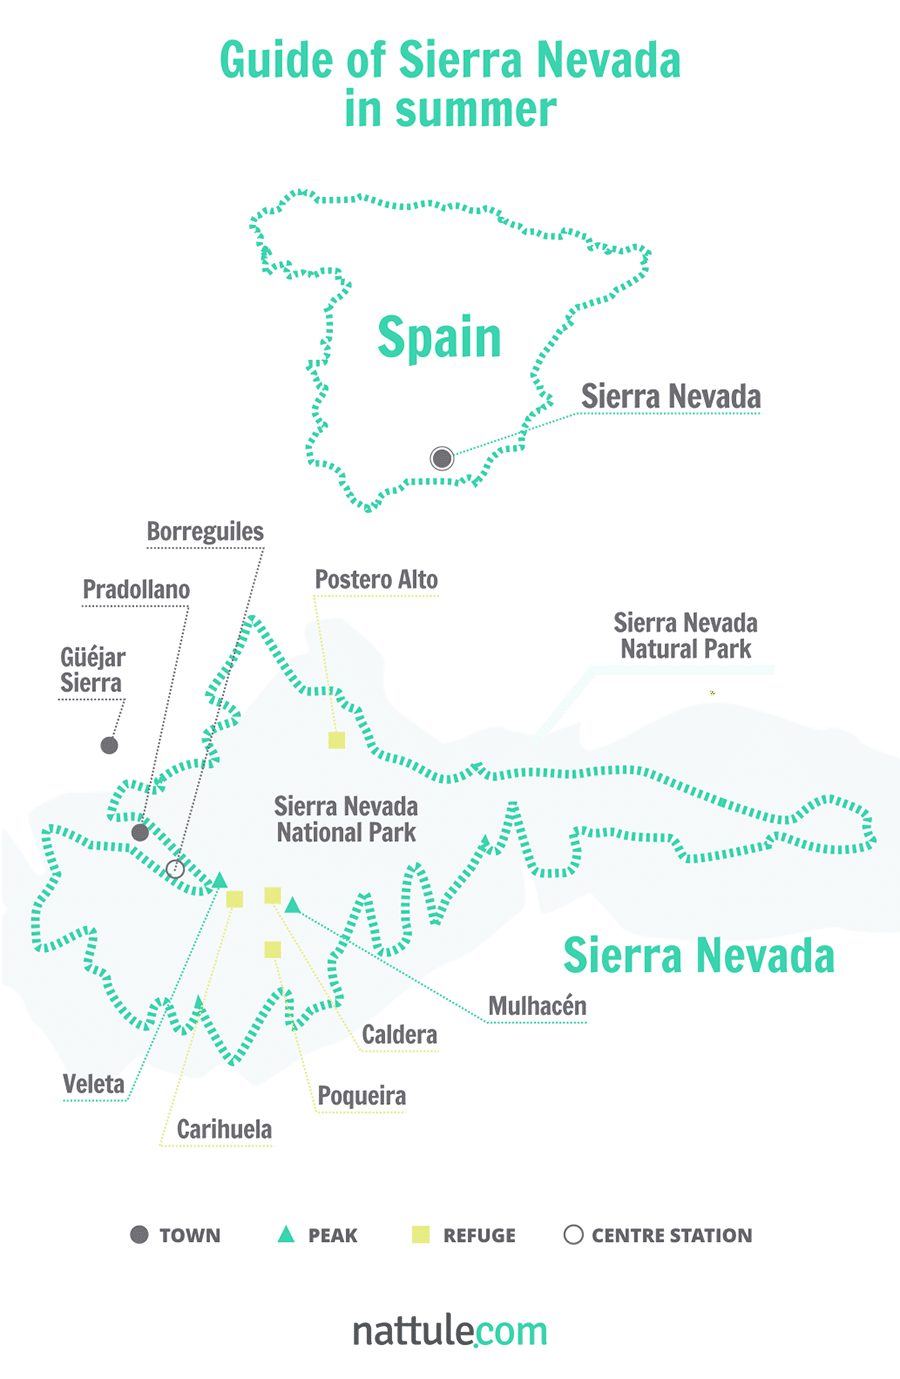 Guide of Sierra Nevada in summer